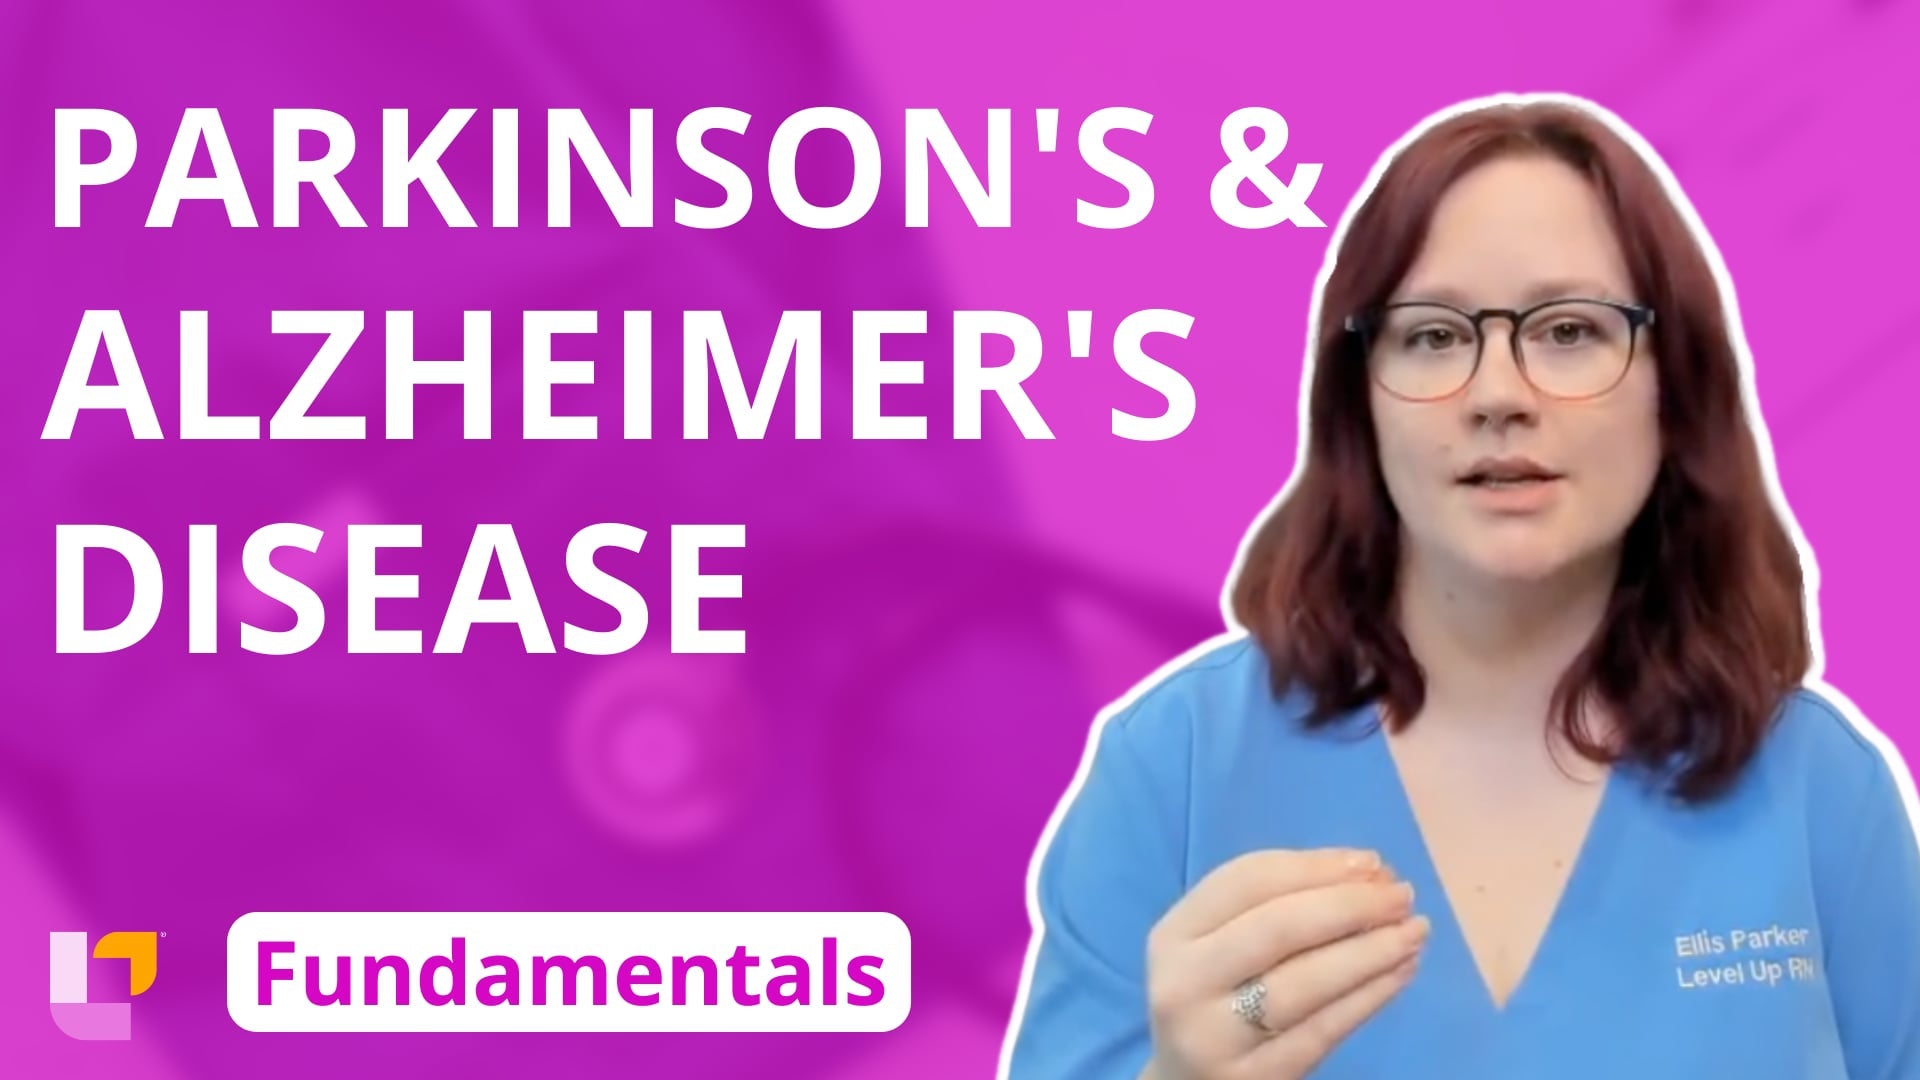 Fundamentals - Gerontology, part 9: Alzheimer's / Parkinson's Disease - LevelUpRN